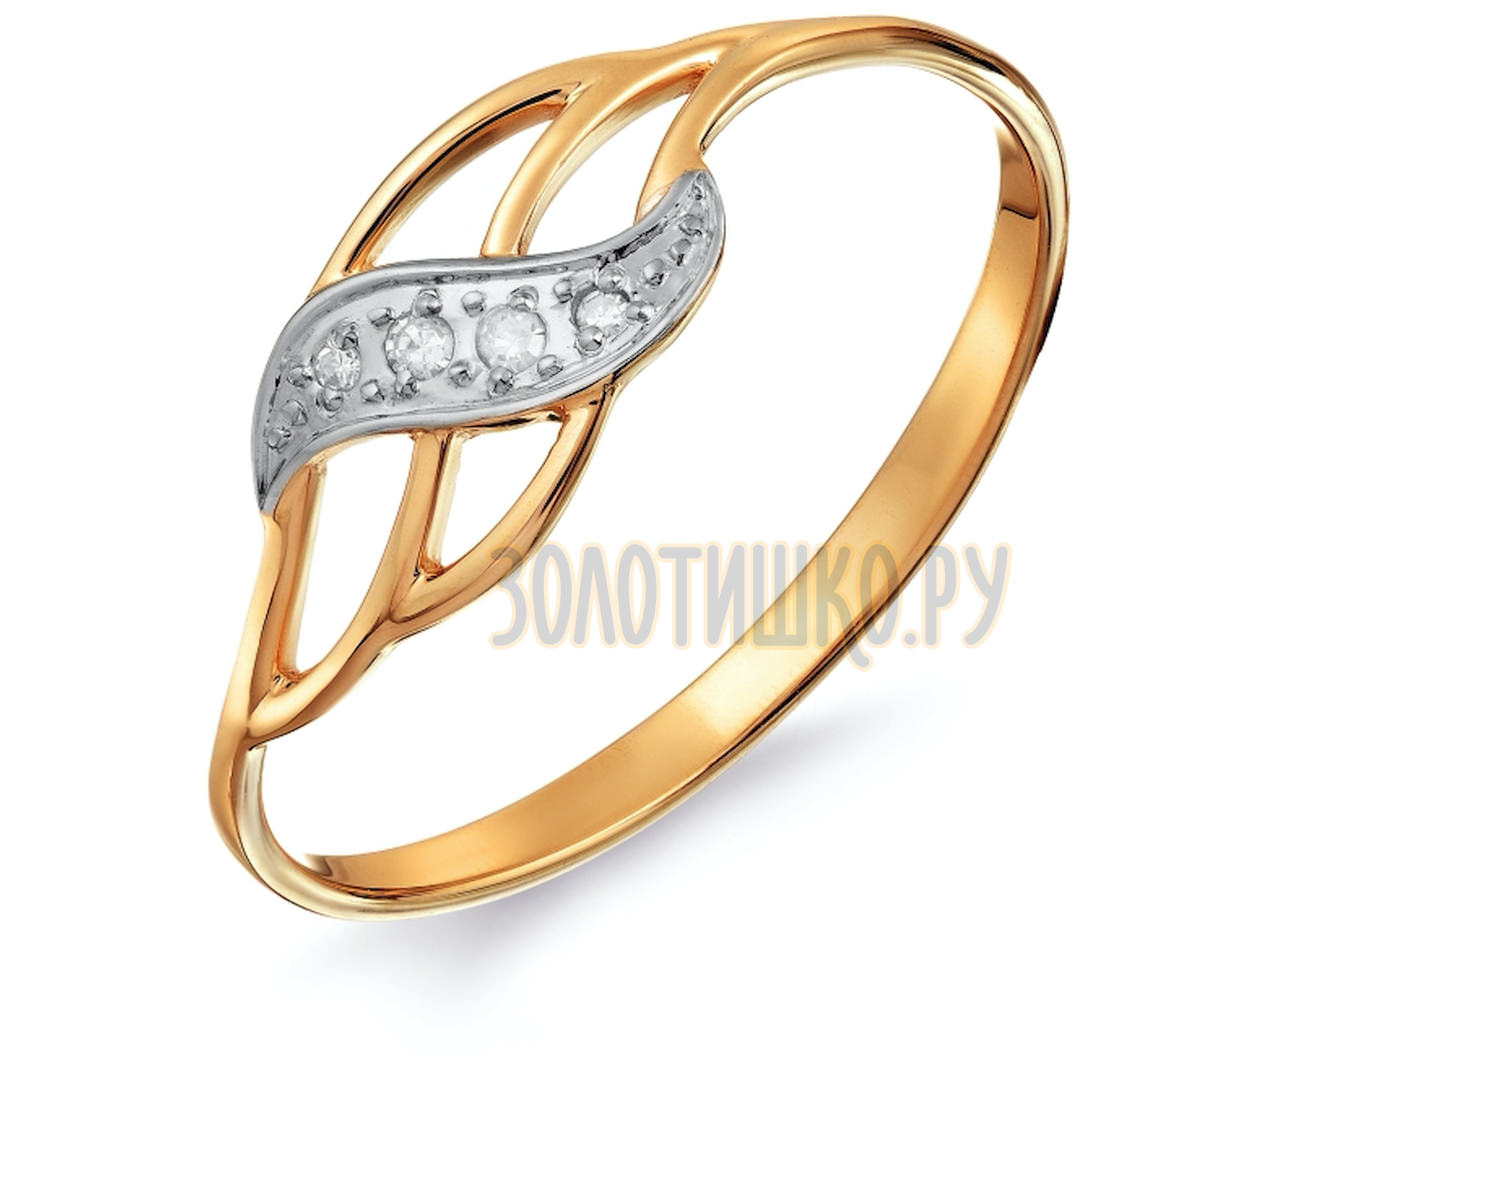 Золотое кольцо 375. Золотое кольцо с бриллиантом 375 проба. Линия любви кольцо т141015997. Кольцо 375 пробы. Кольцо линии любви с бриллиантами.